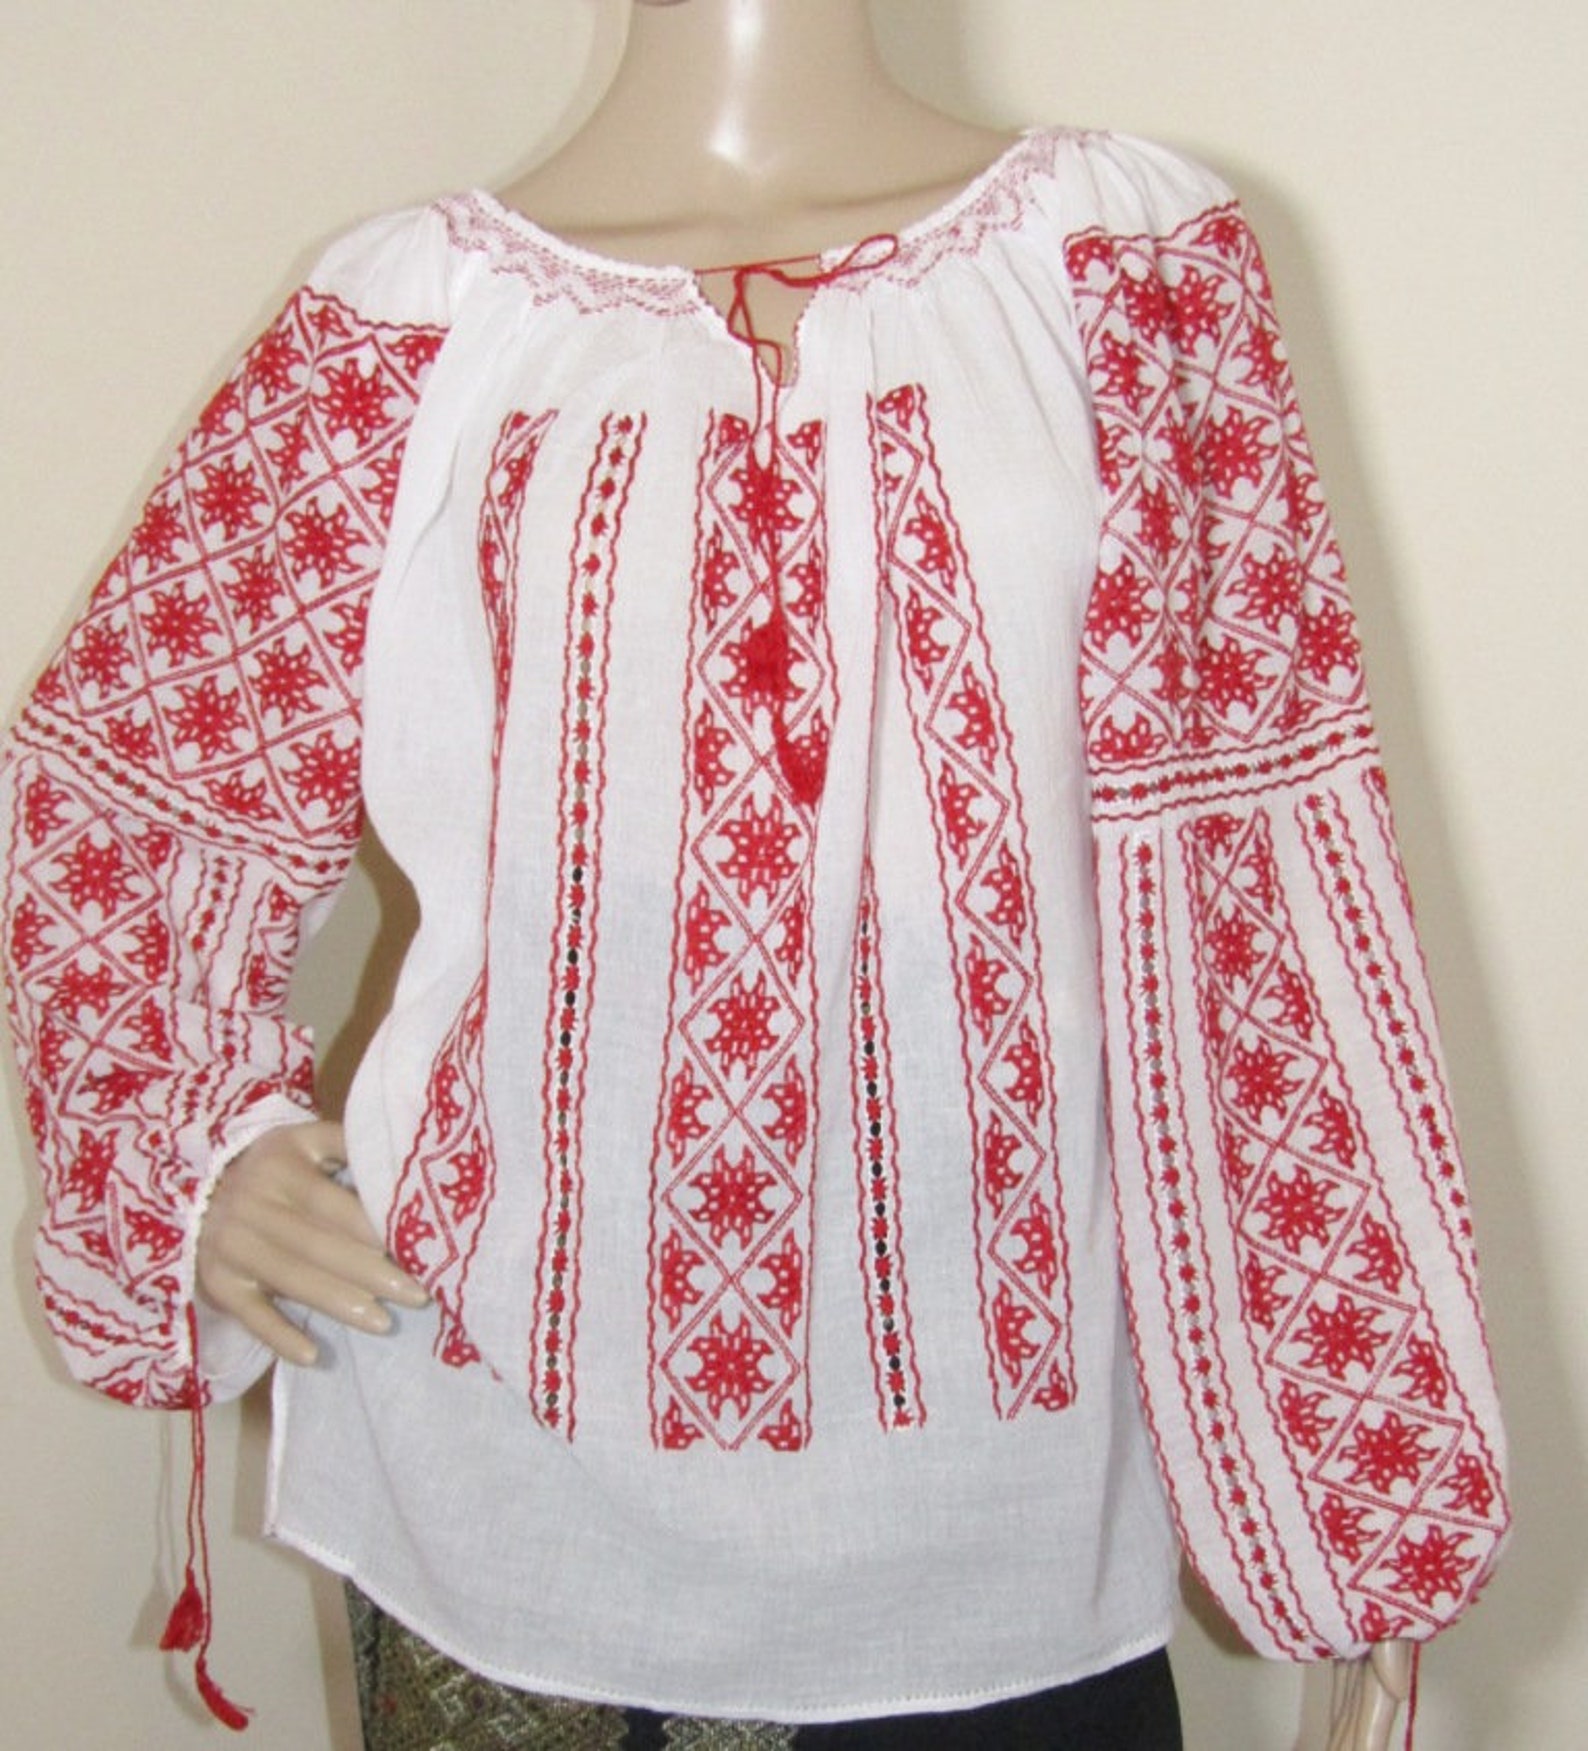 Van Helsing Anna Valerious peasant blouse Romanian peasant | Etsy